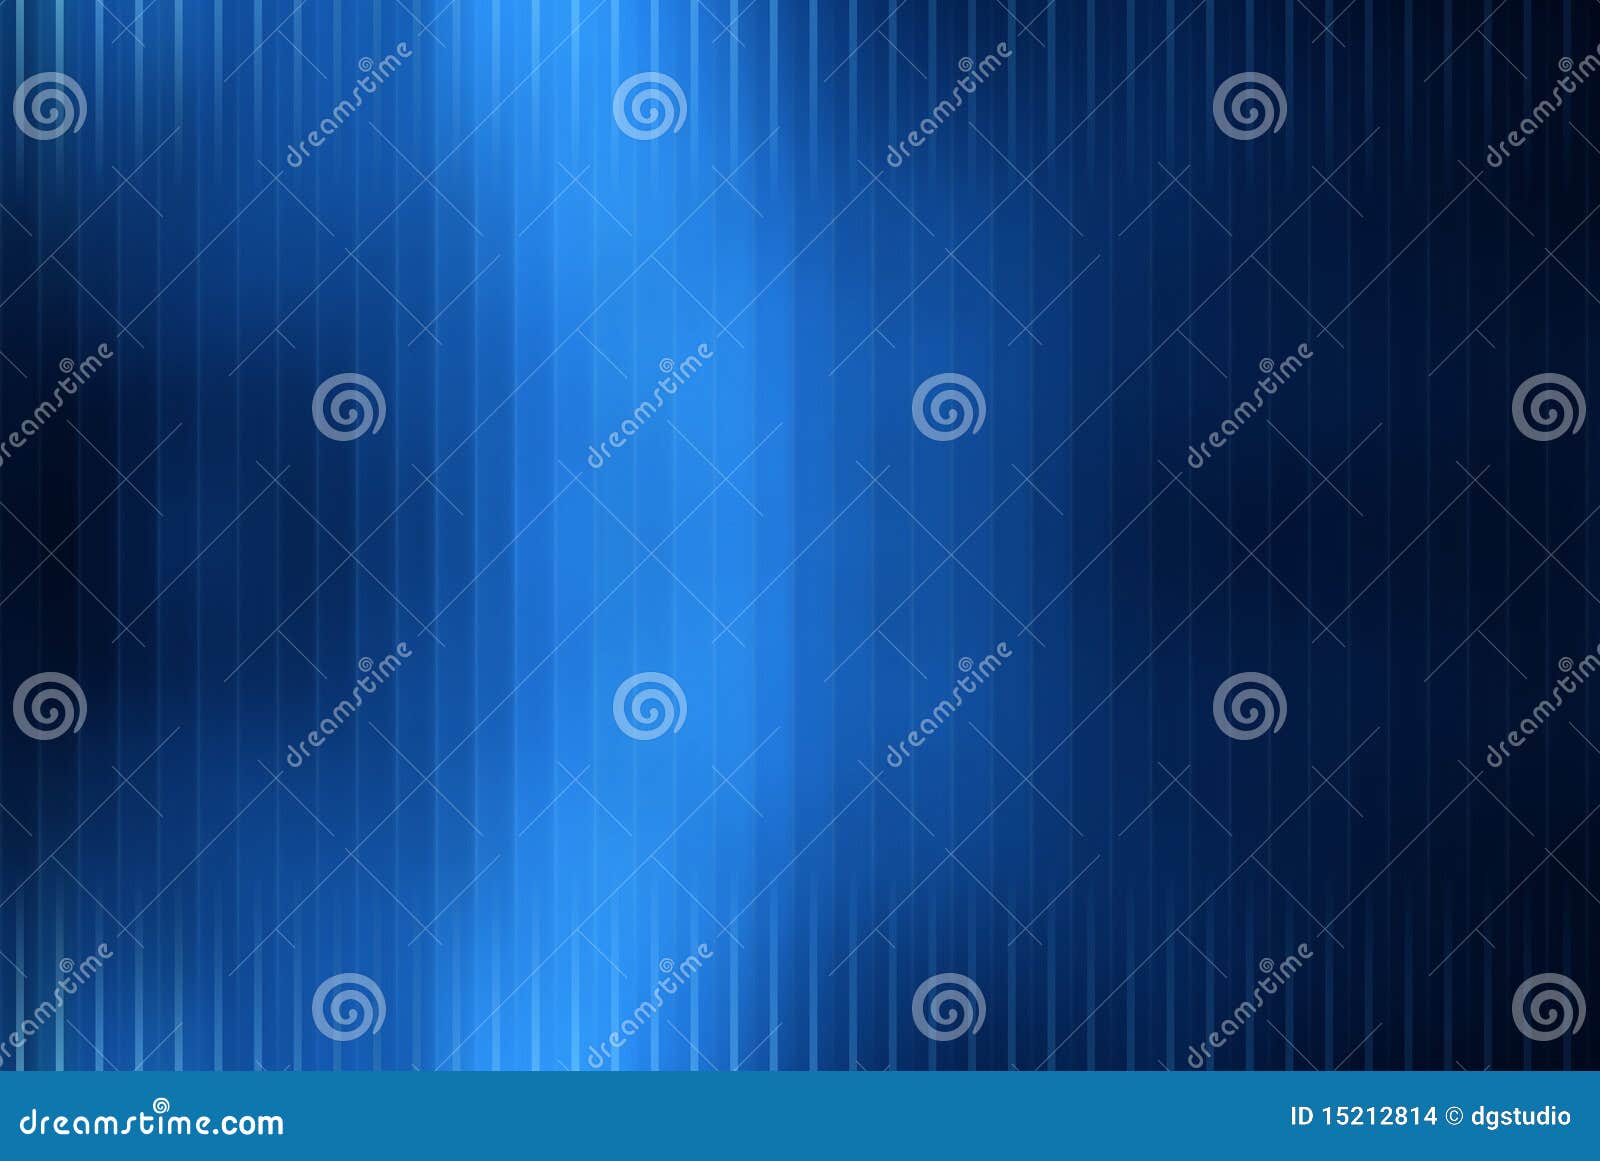 Blur texture stock illustration. Illustration of abstracts - 15212814